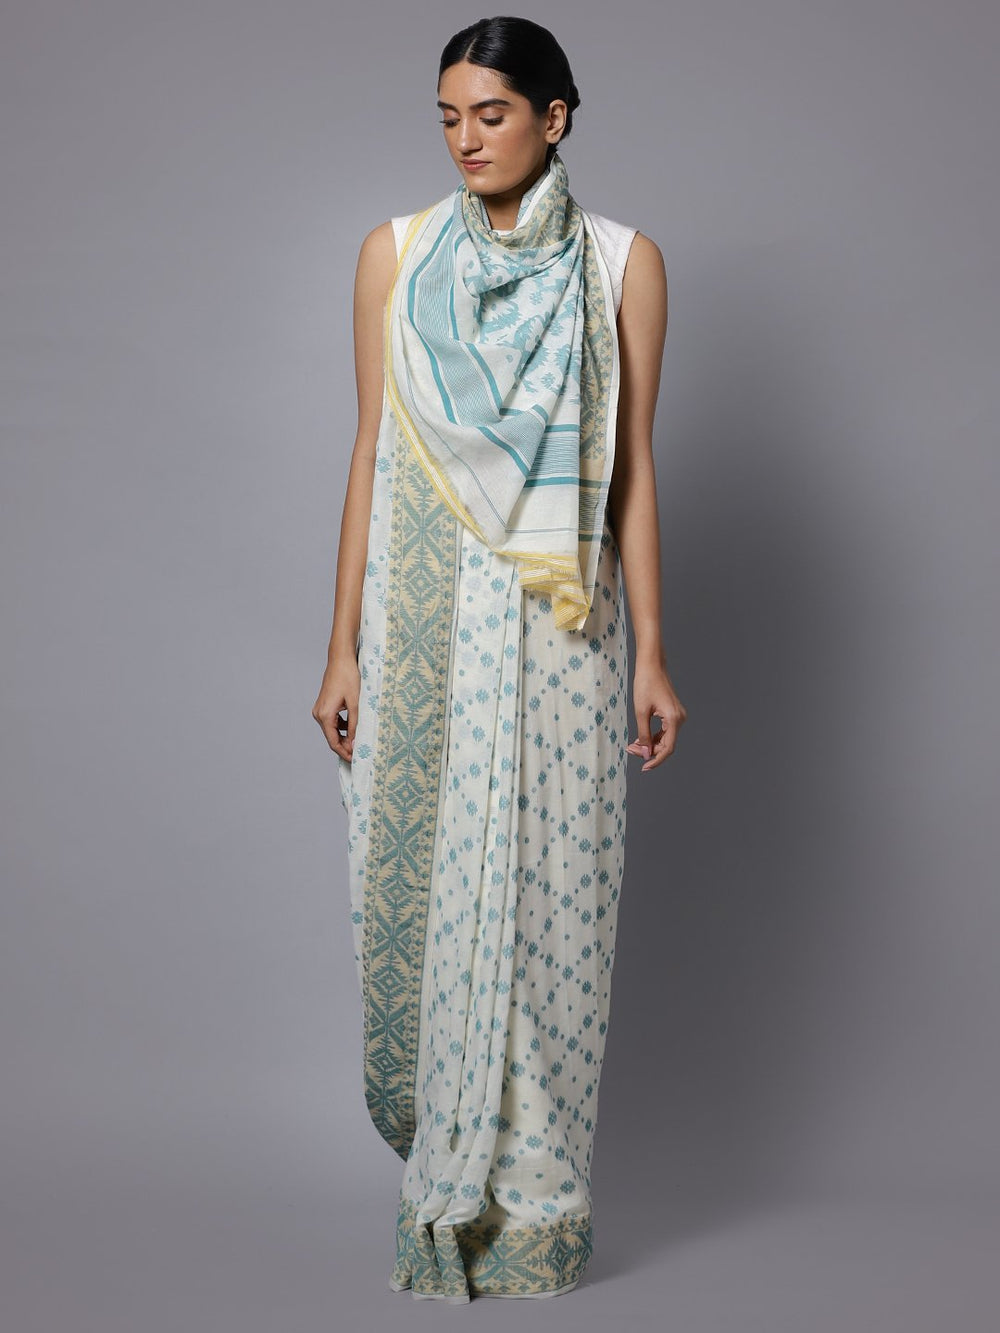 Jamdani white bengal handloom cotton saree